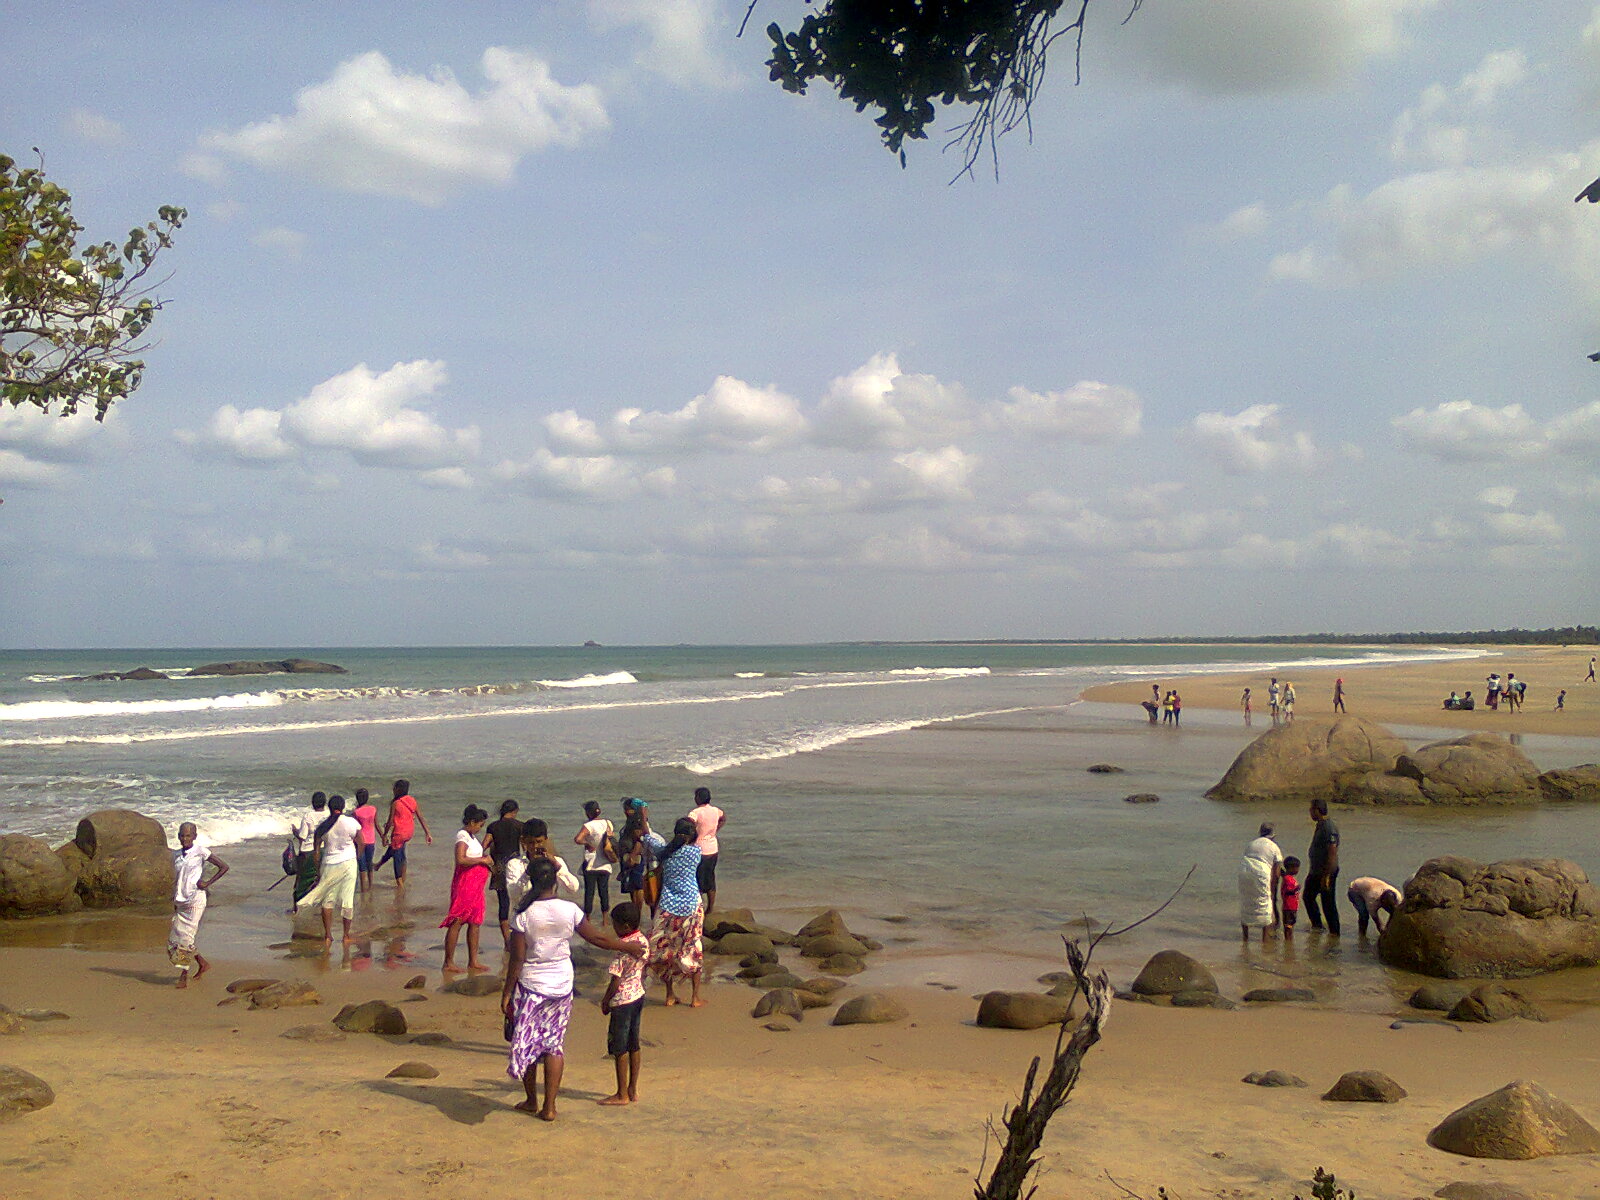 Foto de Lanka Patuna Beach - lugar popular entre os apreciadores de relaxamento